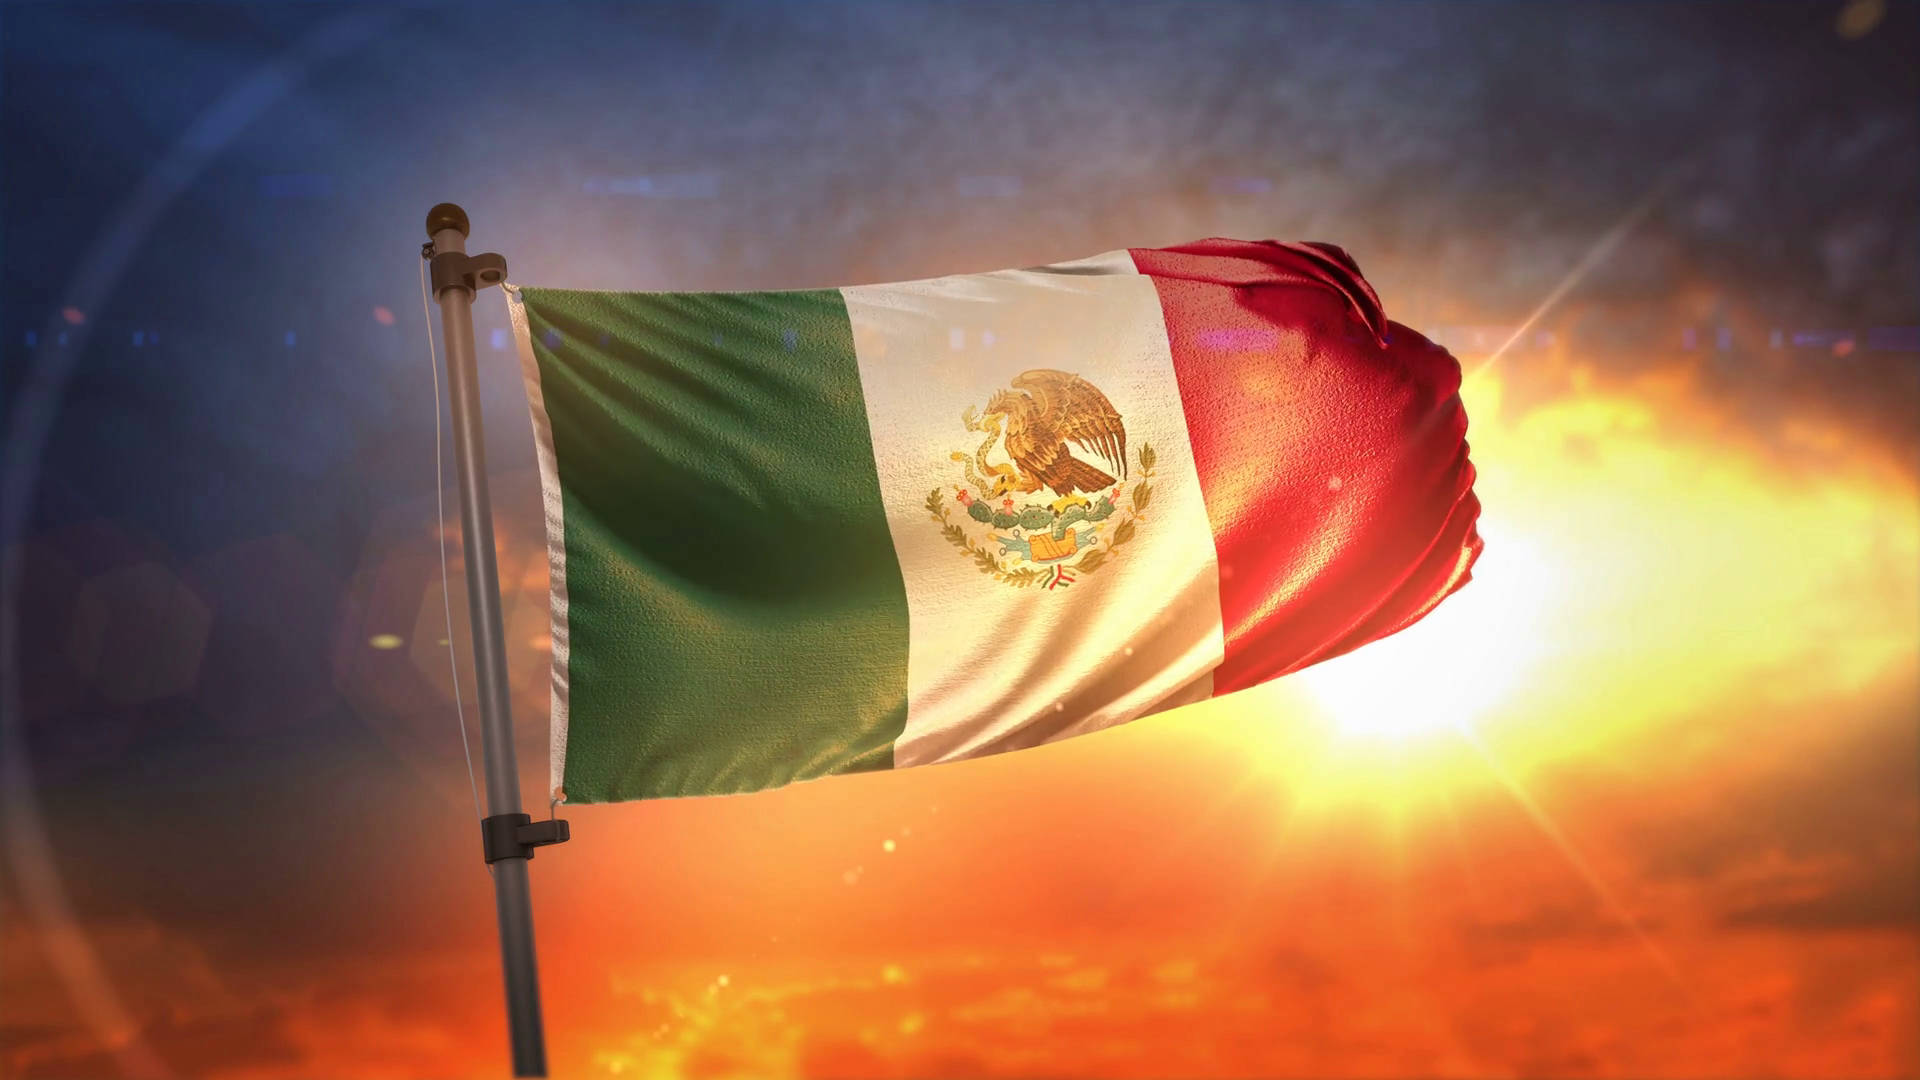 Blazing Sun Behind The Mexico Flag Wallpaper